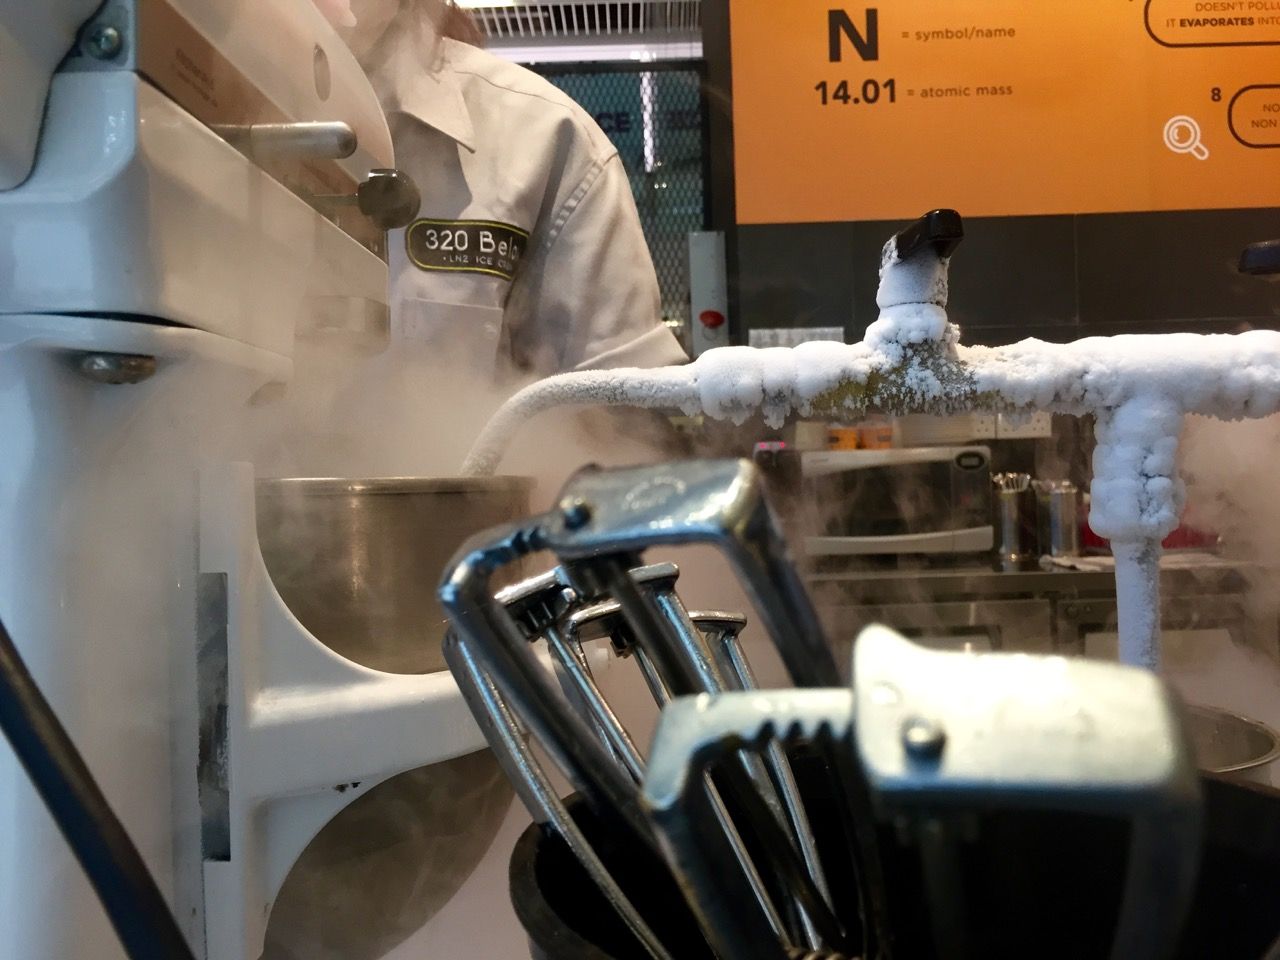 Ice cream being made using liquid nitrogen instead of water ice.